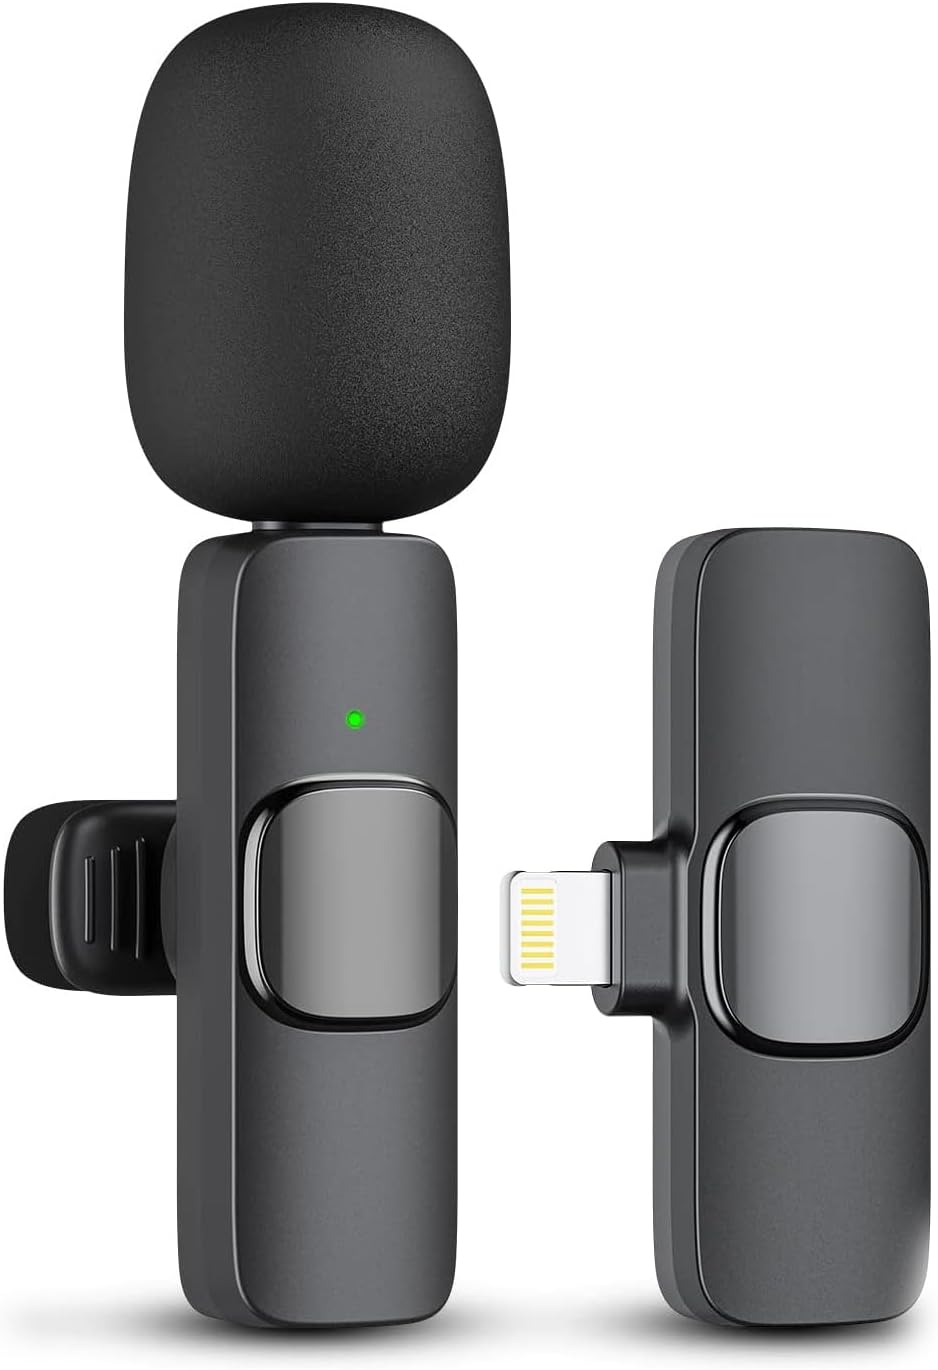 Micrófono Lavalier inalámbrico para teléfono (USB-C), micrófono inalám -  VIRTUAL MUEBLES